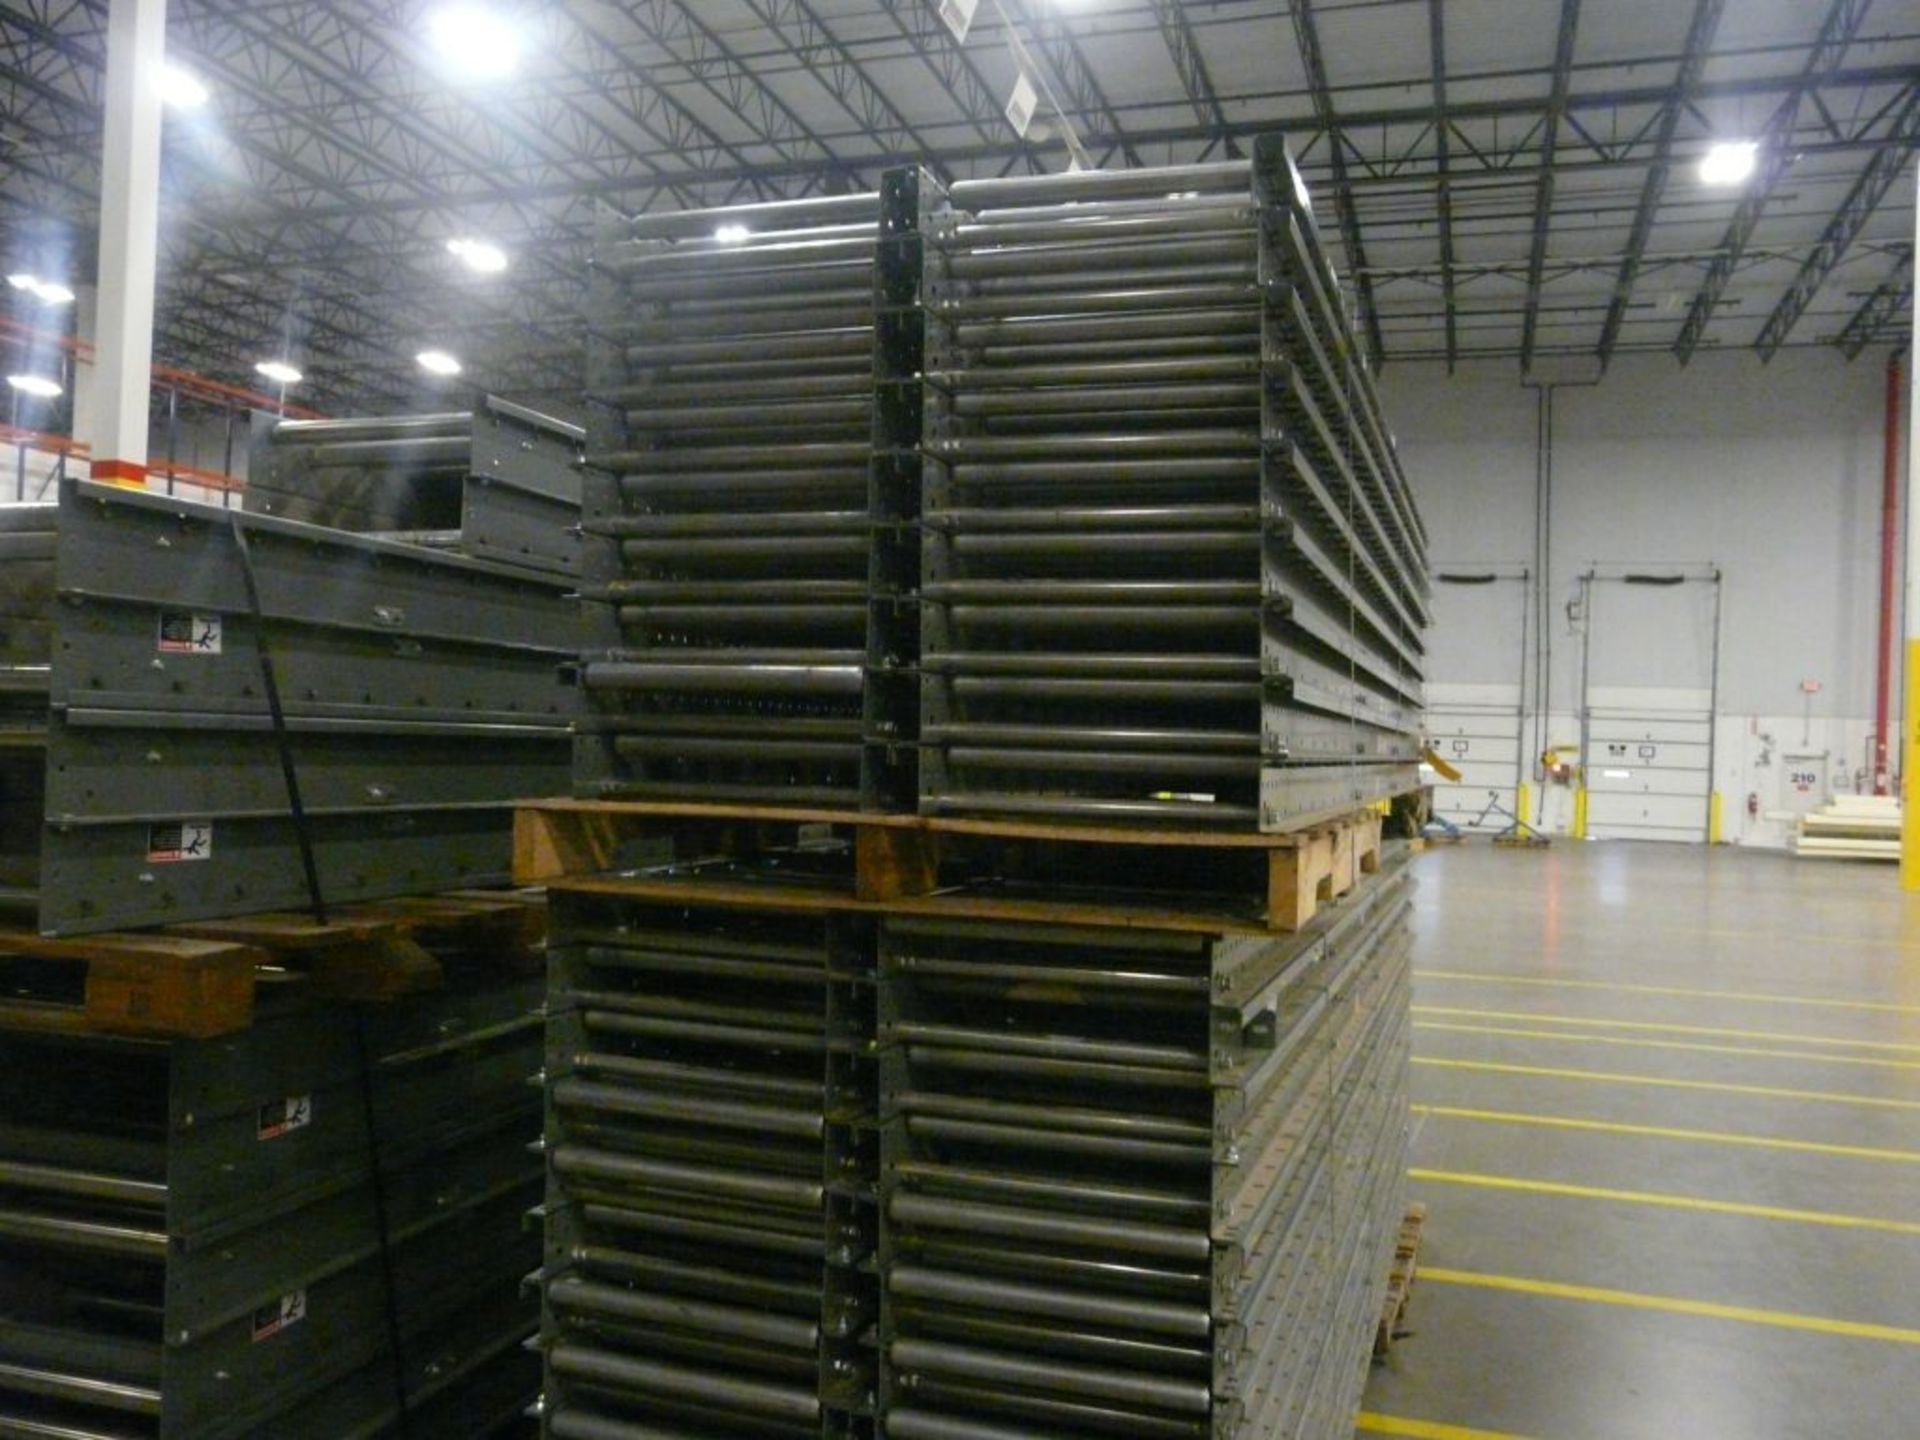 Lot of (26) 140 Belt Intermediate Conveyors - 12'L x 16"W; Tag: 223667 - $30 Lot Loading Fee - Image 2 of 3